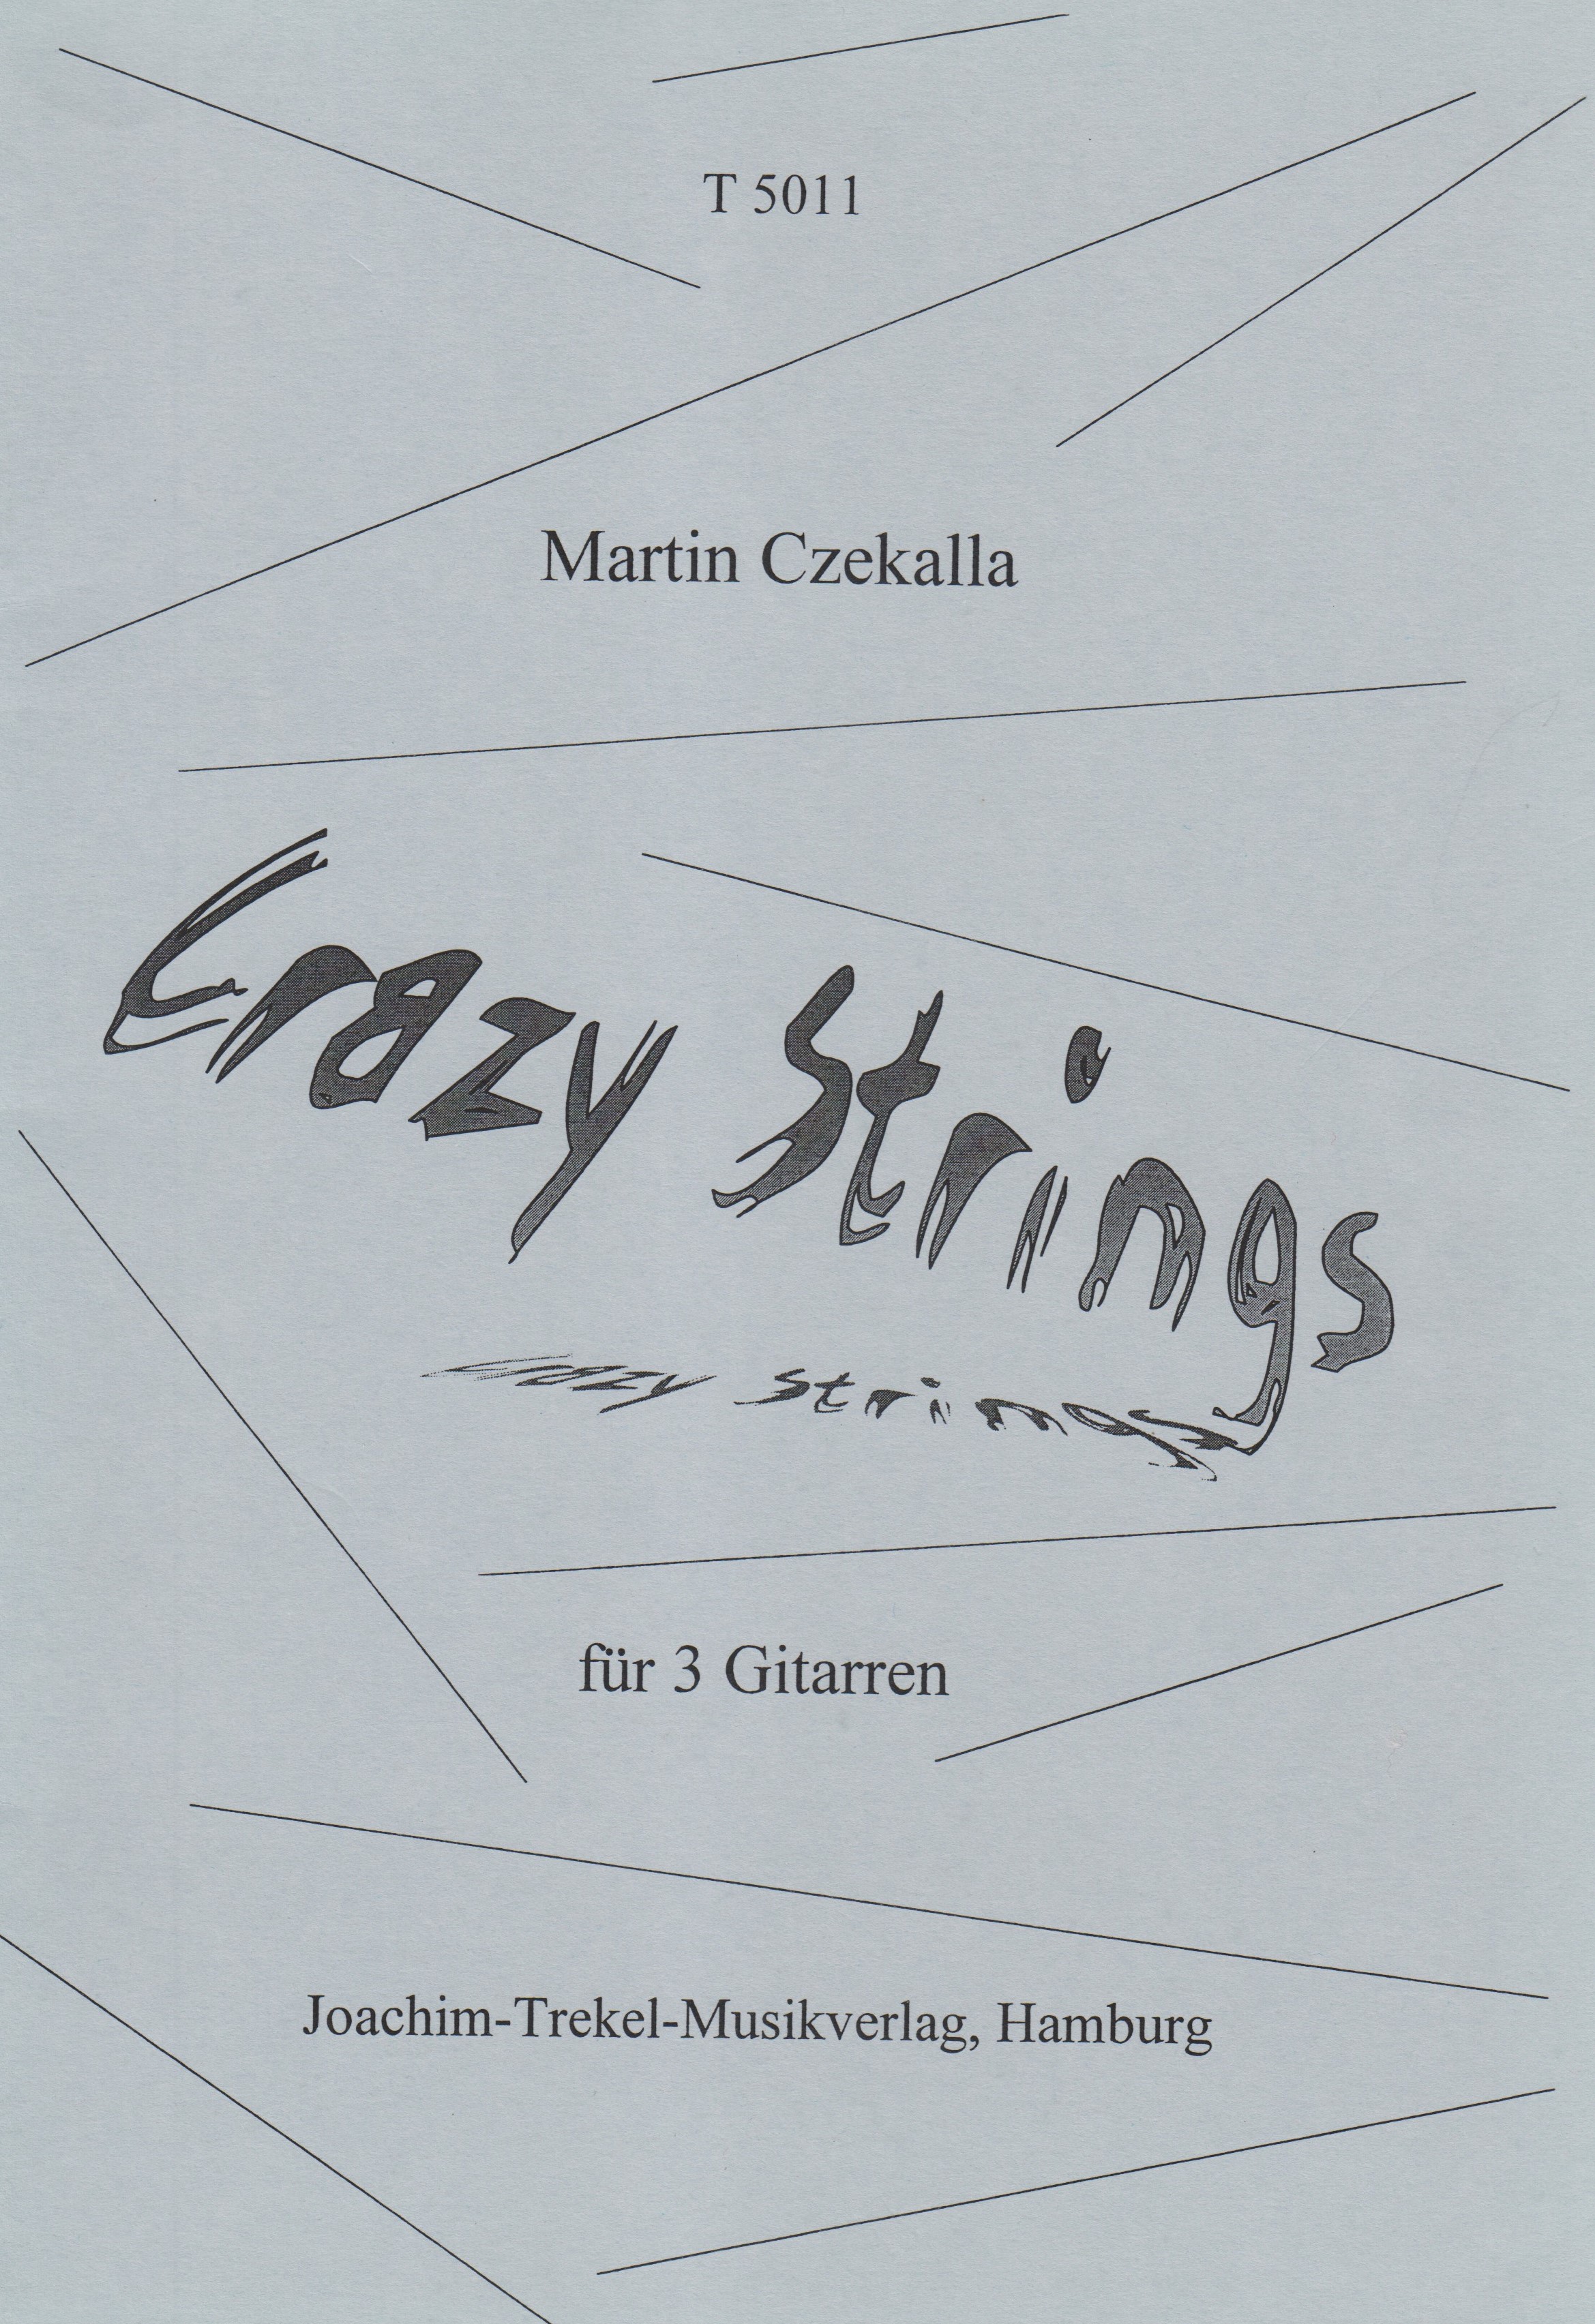 Crazy Strings